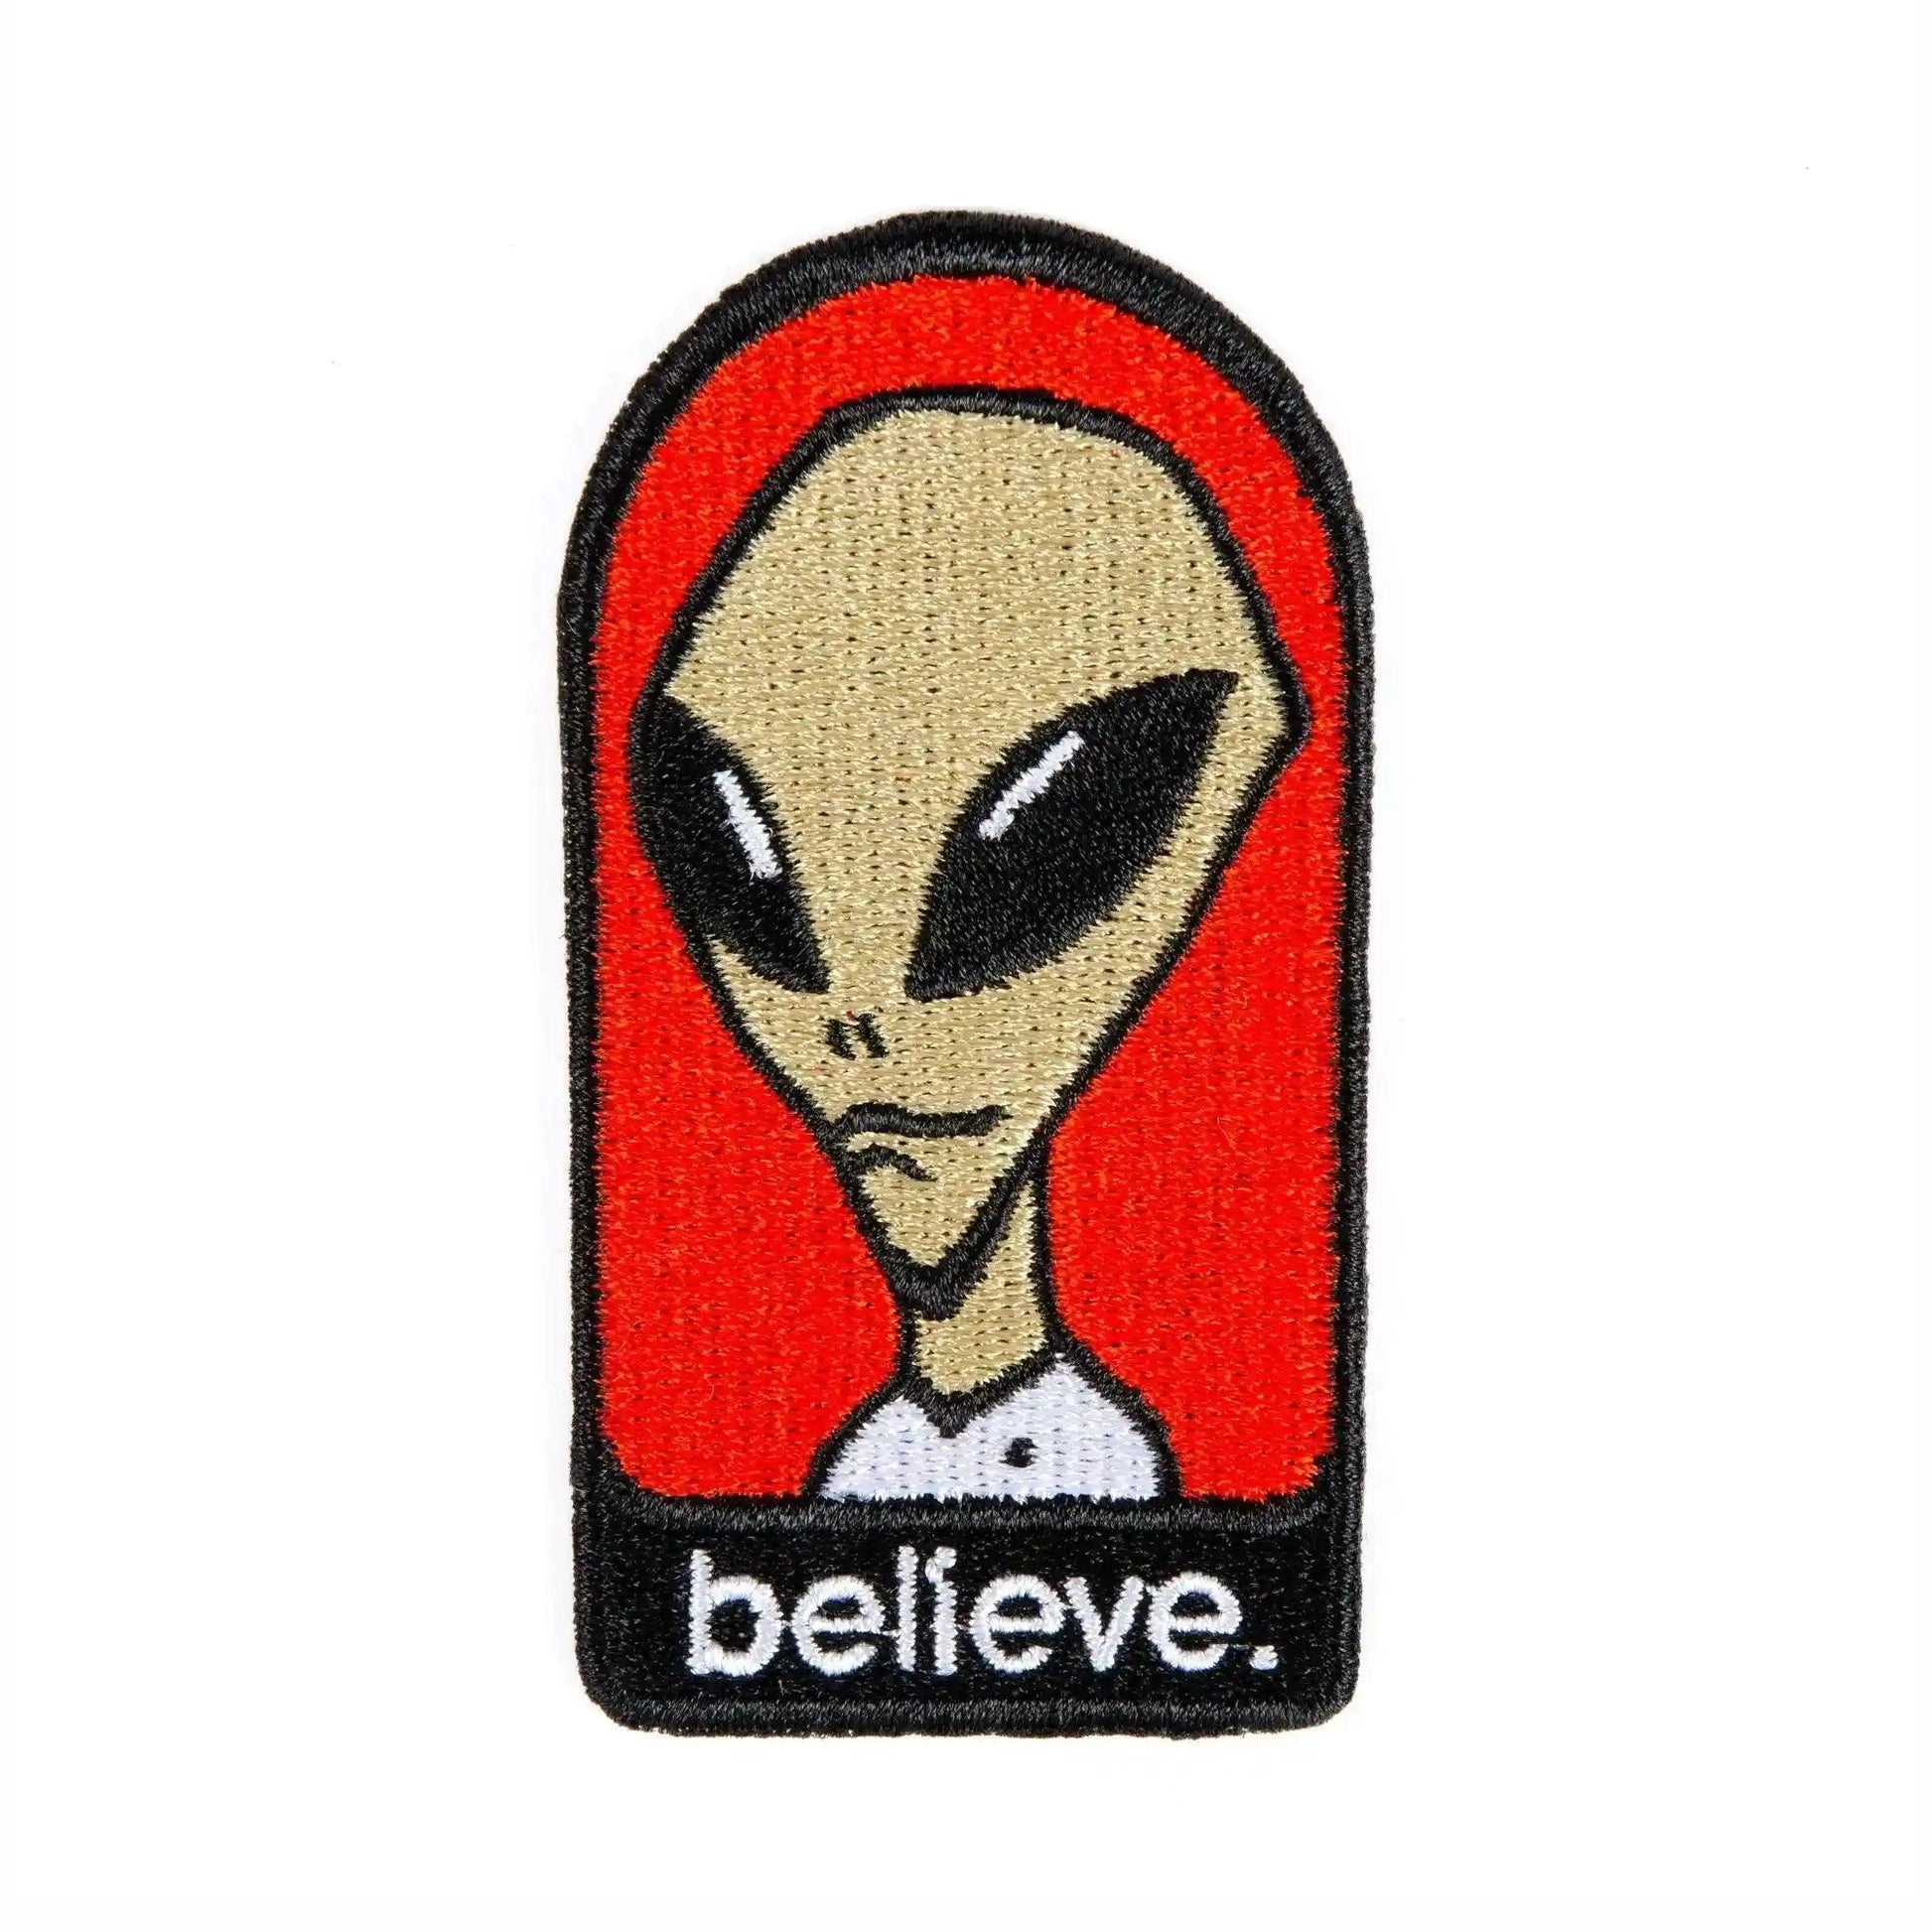 Alien Workshop Believe Patch, red - Tiki Room Skateboards - 1